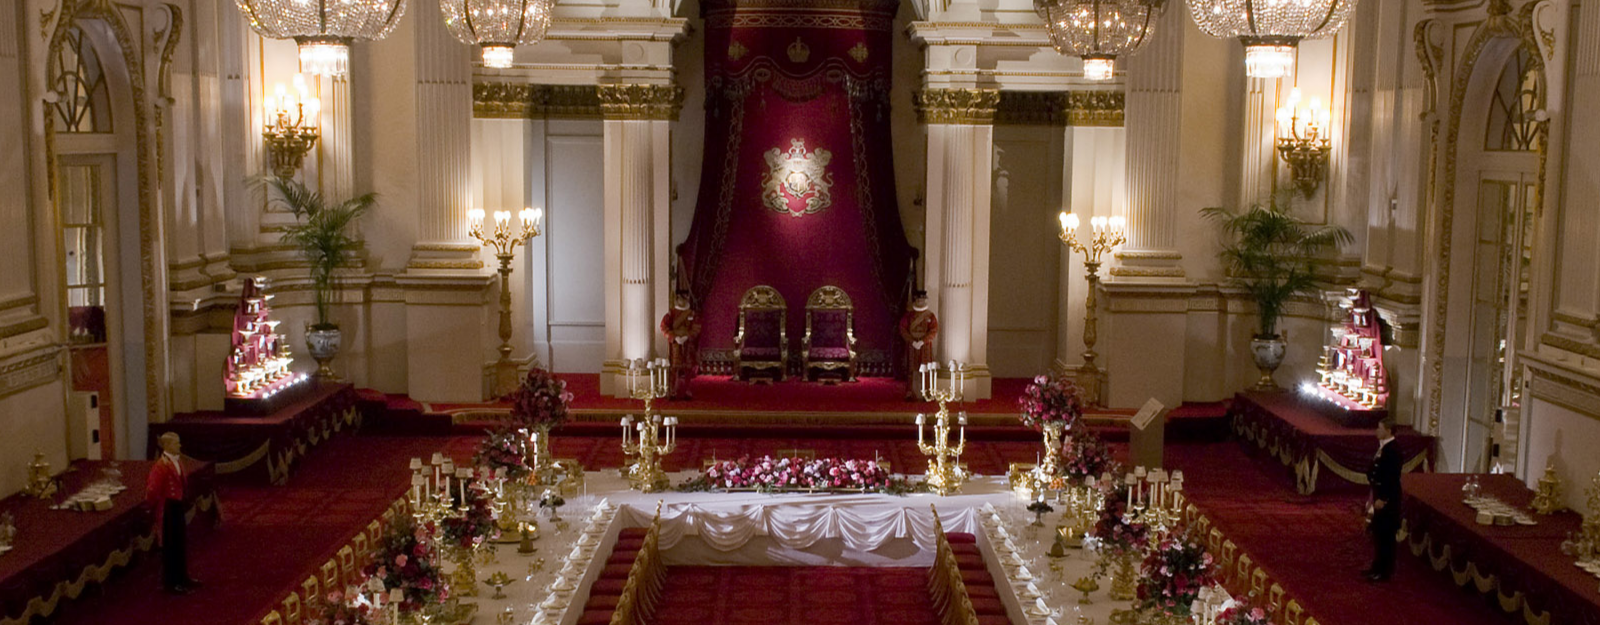 The Ballroom at Buckingham Palace